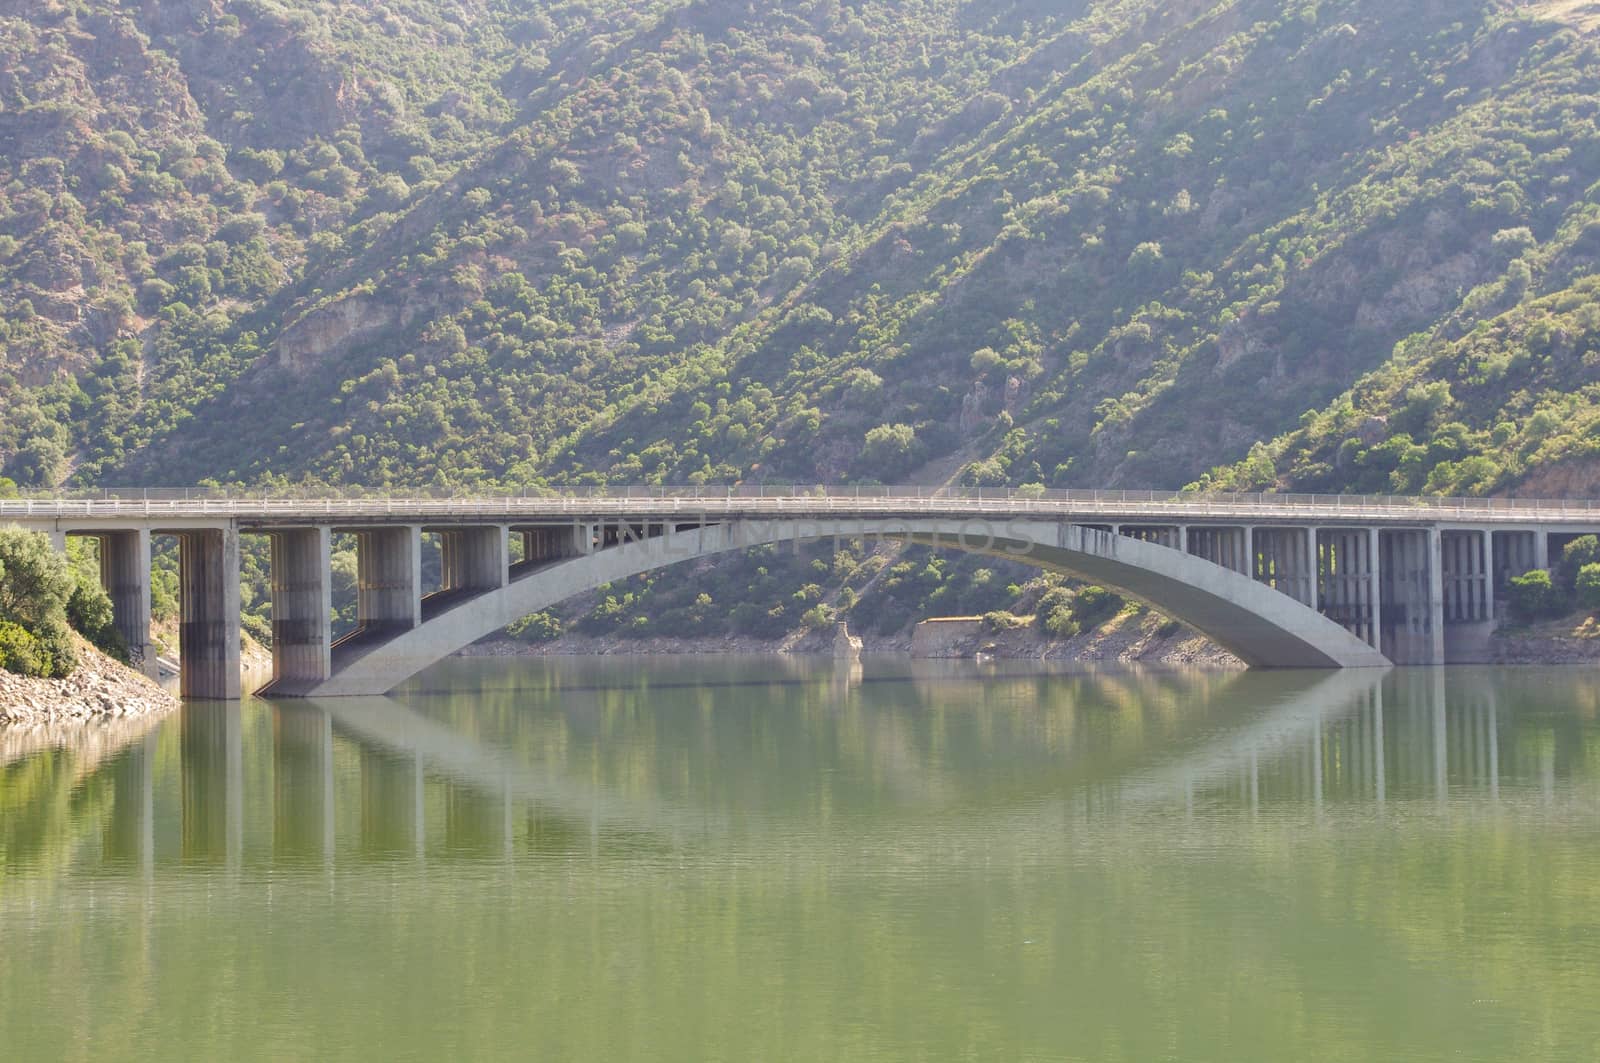 Concrete bridge reflection in the lake